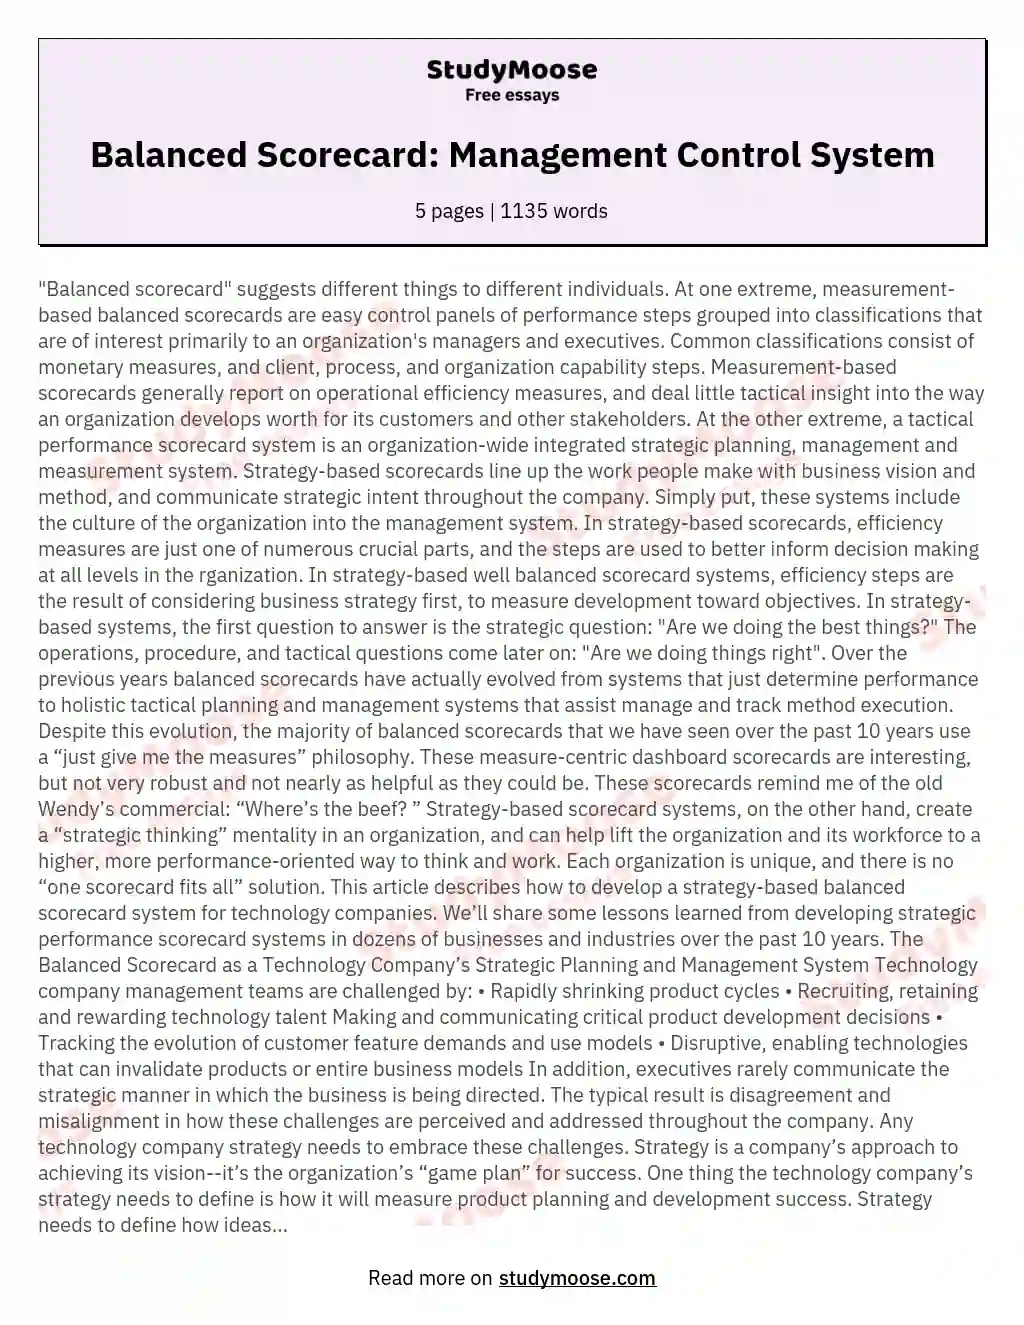 Balanced Scorecard: Management Control System